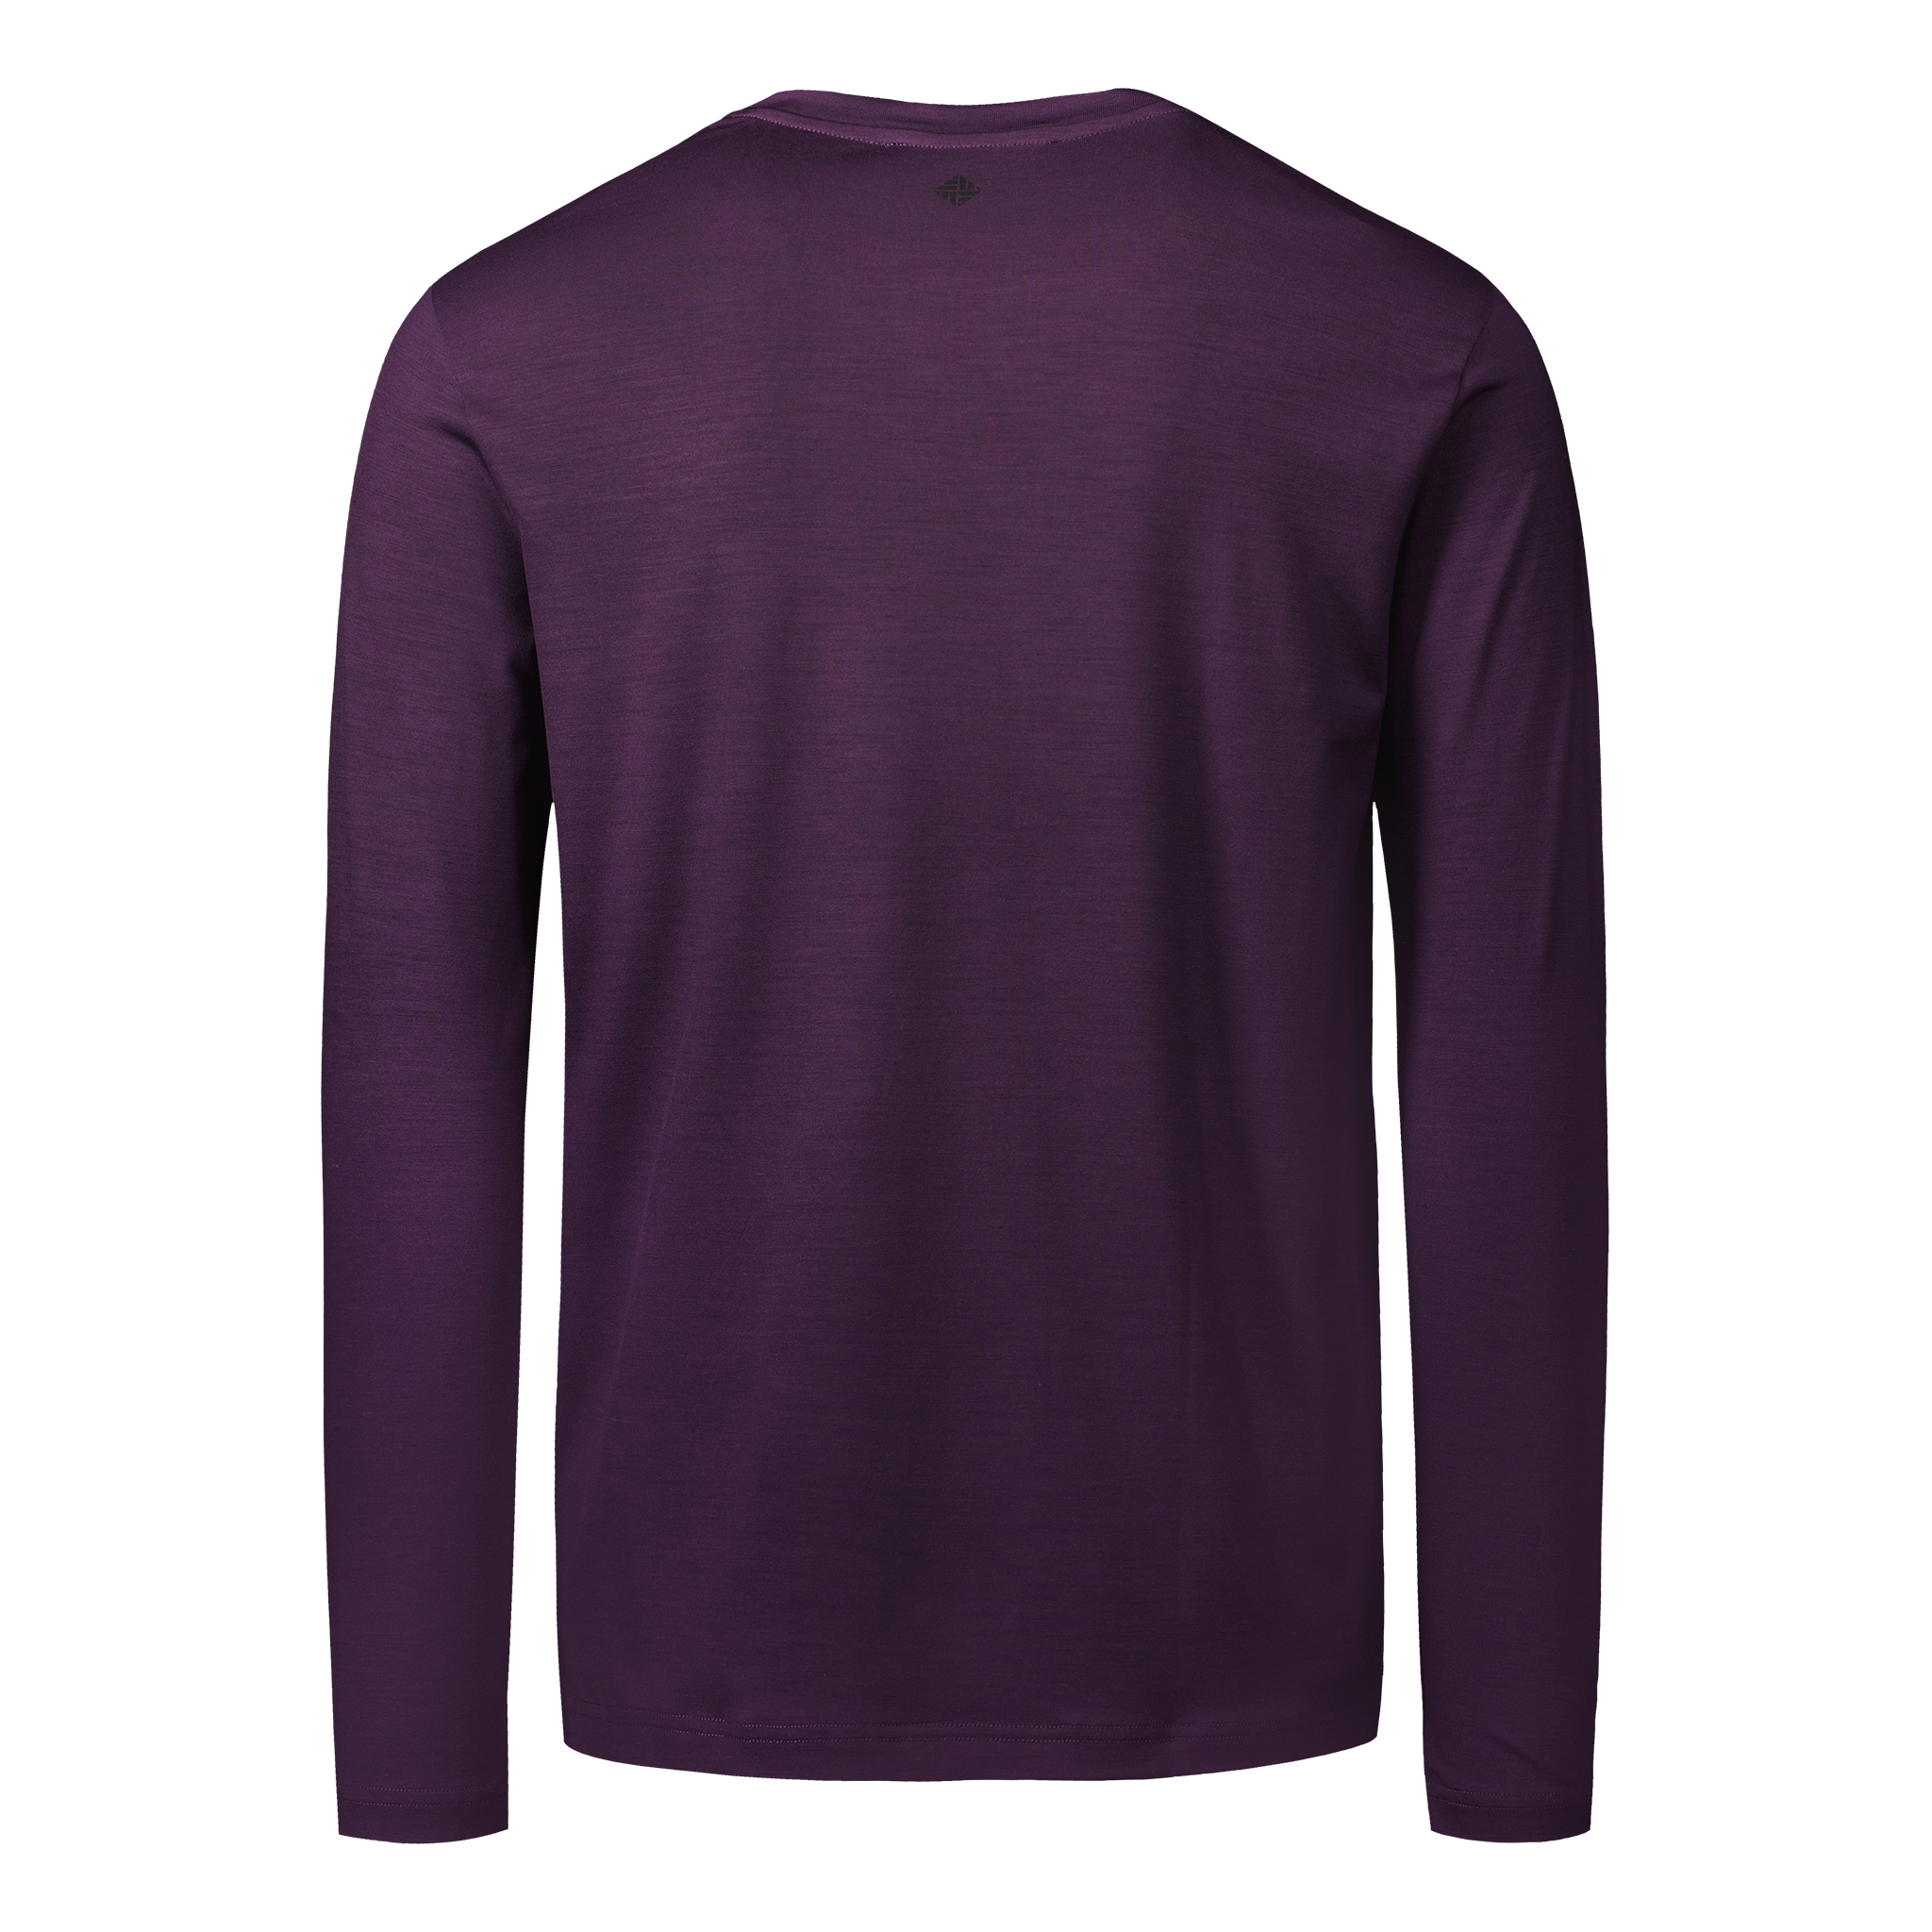 Ultrafine Merino Long Sleeve T-Shirt | Plum